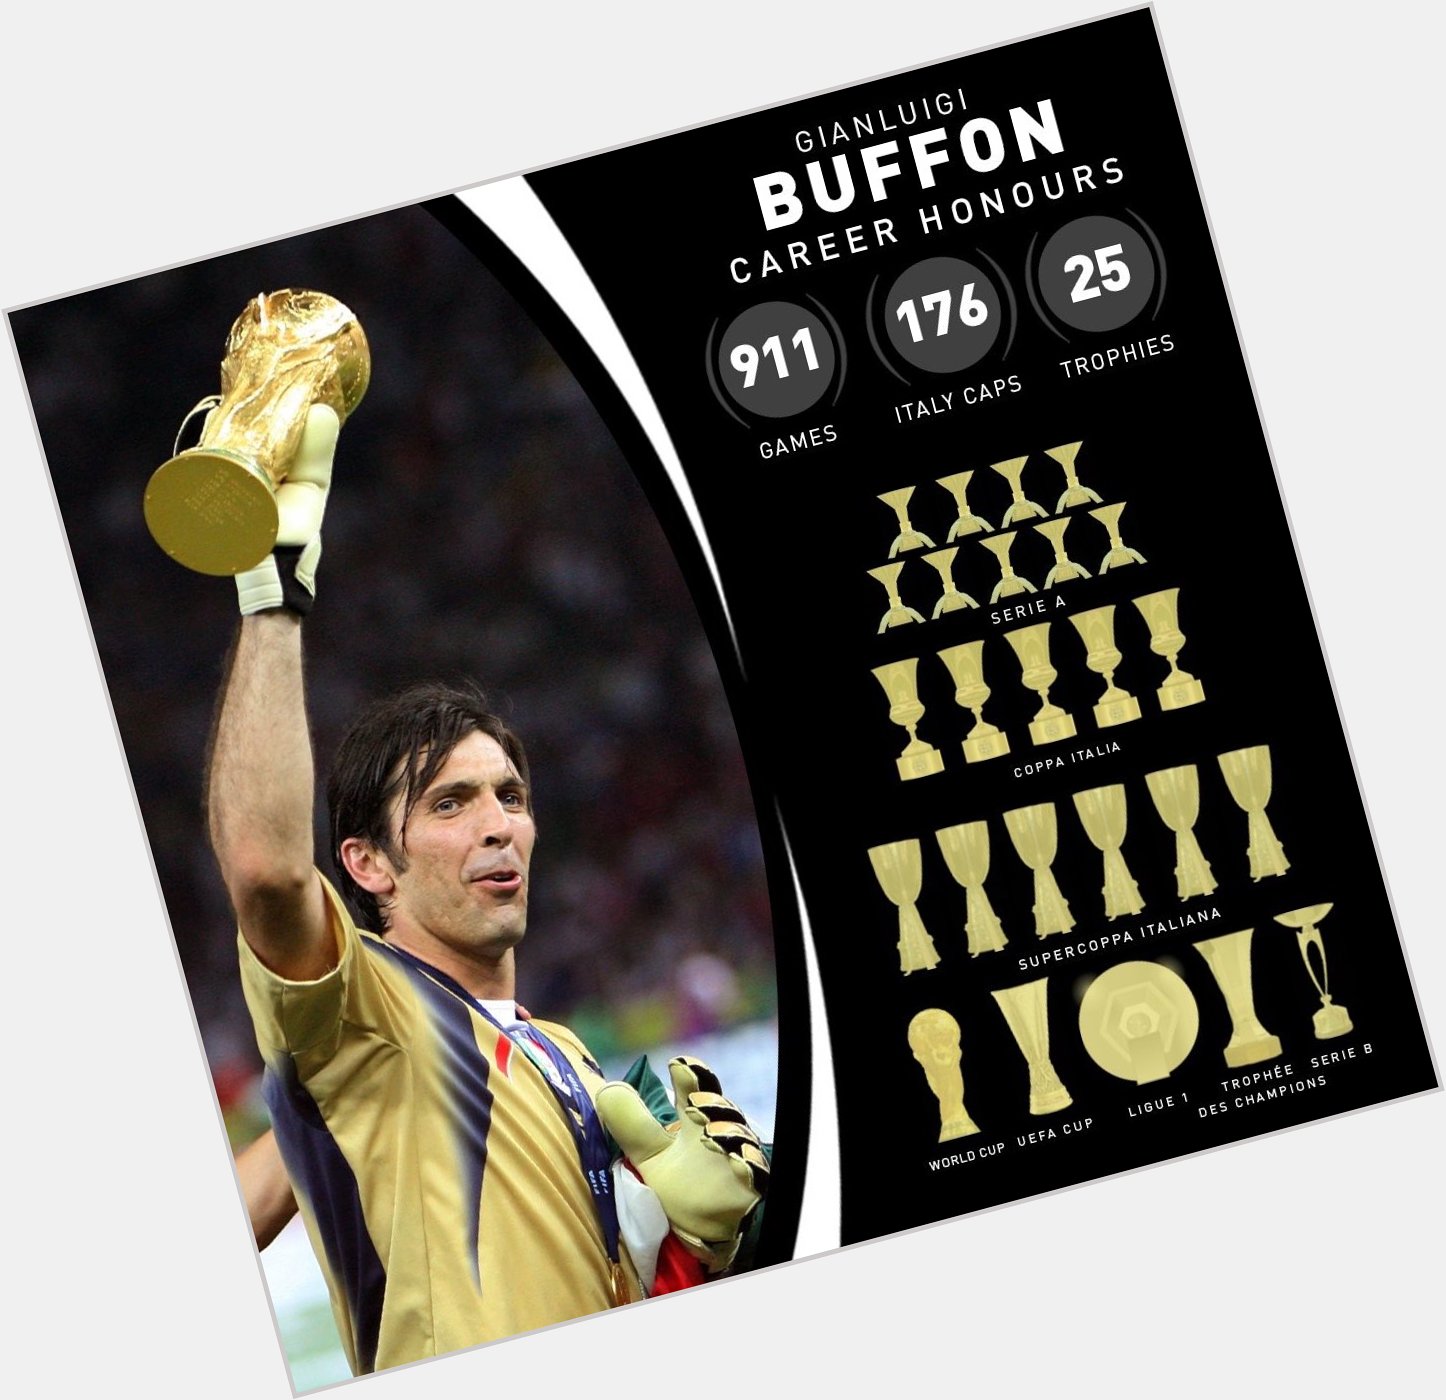 42 years ago today, a legendary goalkeeper was born!

Happy birthday to Gianluigi Buffon 